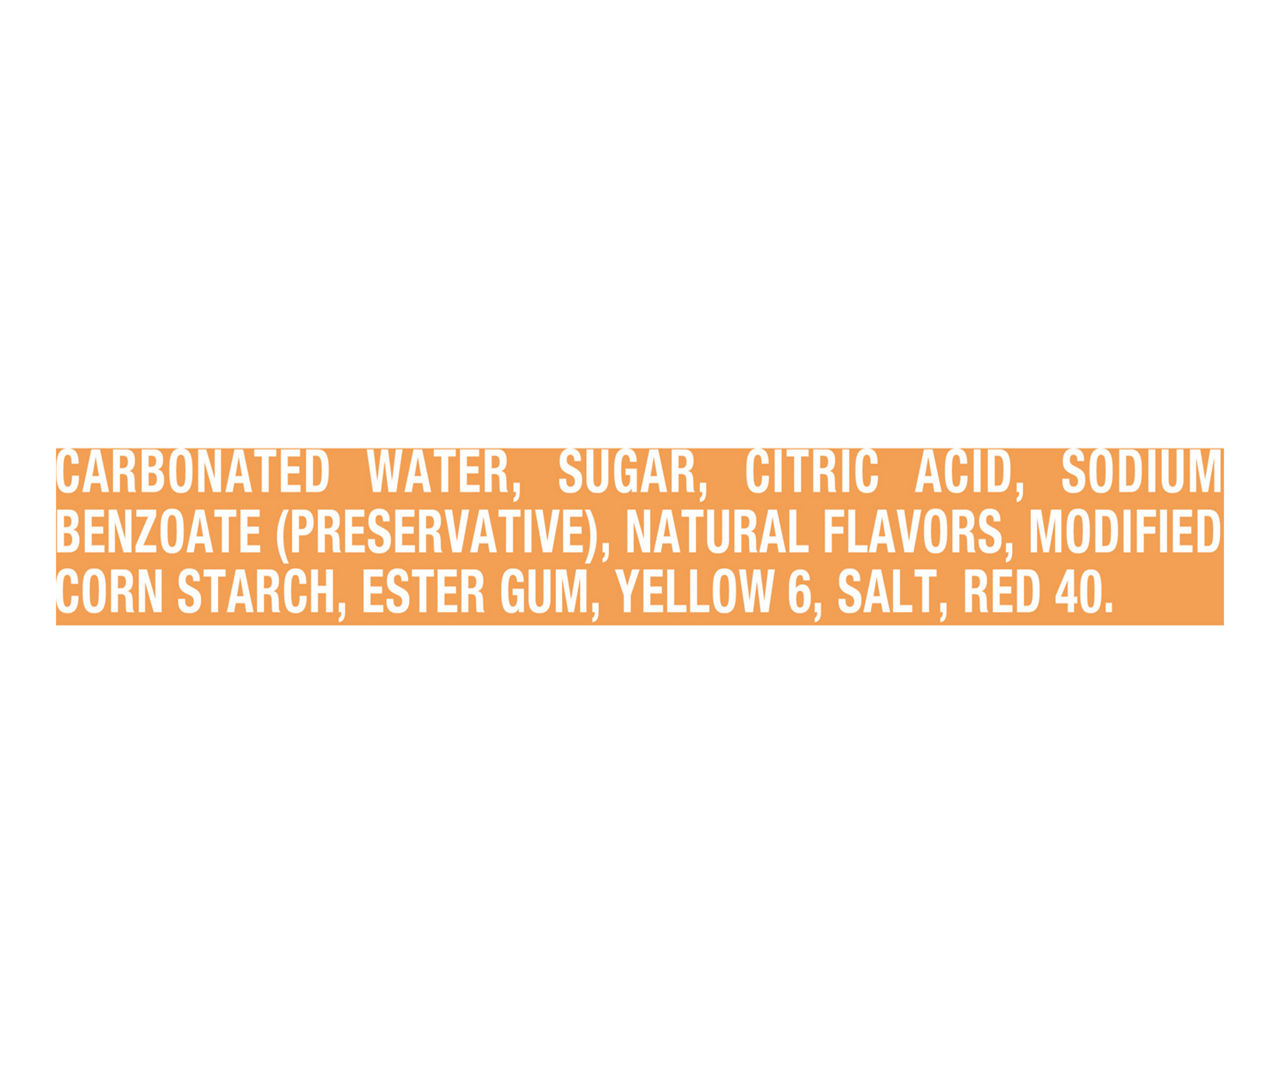 Crush Orange, Strawberry, and Cream Soda Real Sugar Variety Pack, 24 pk./12  oz. Glass Bottles